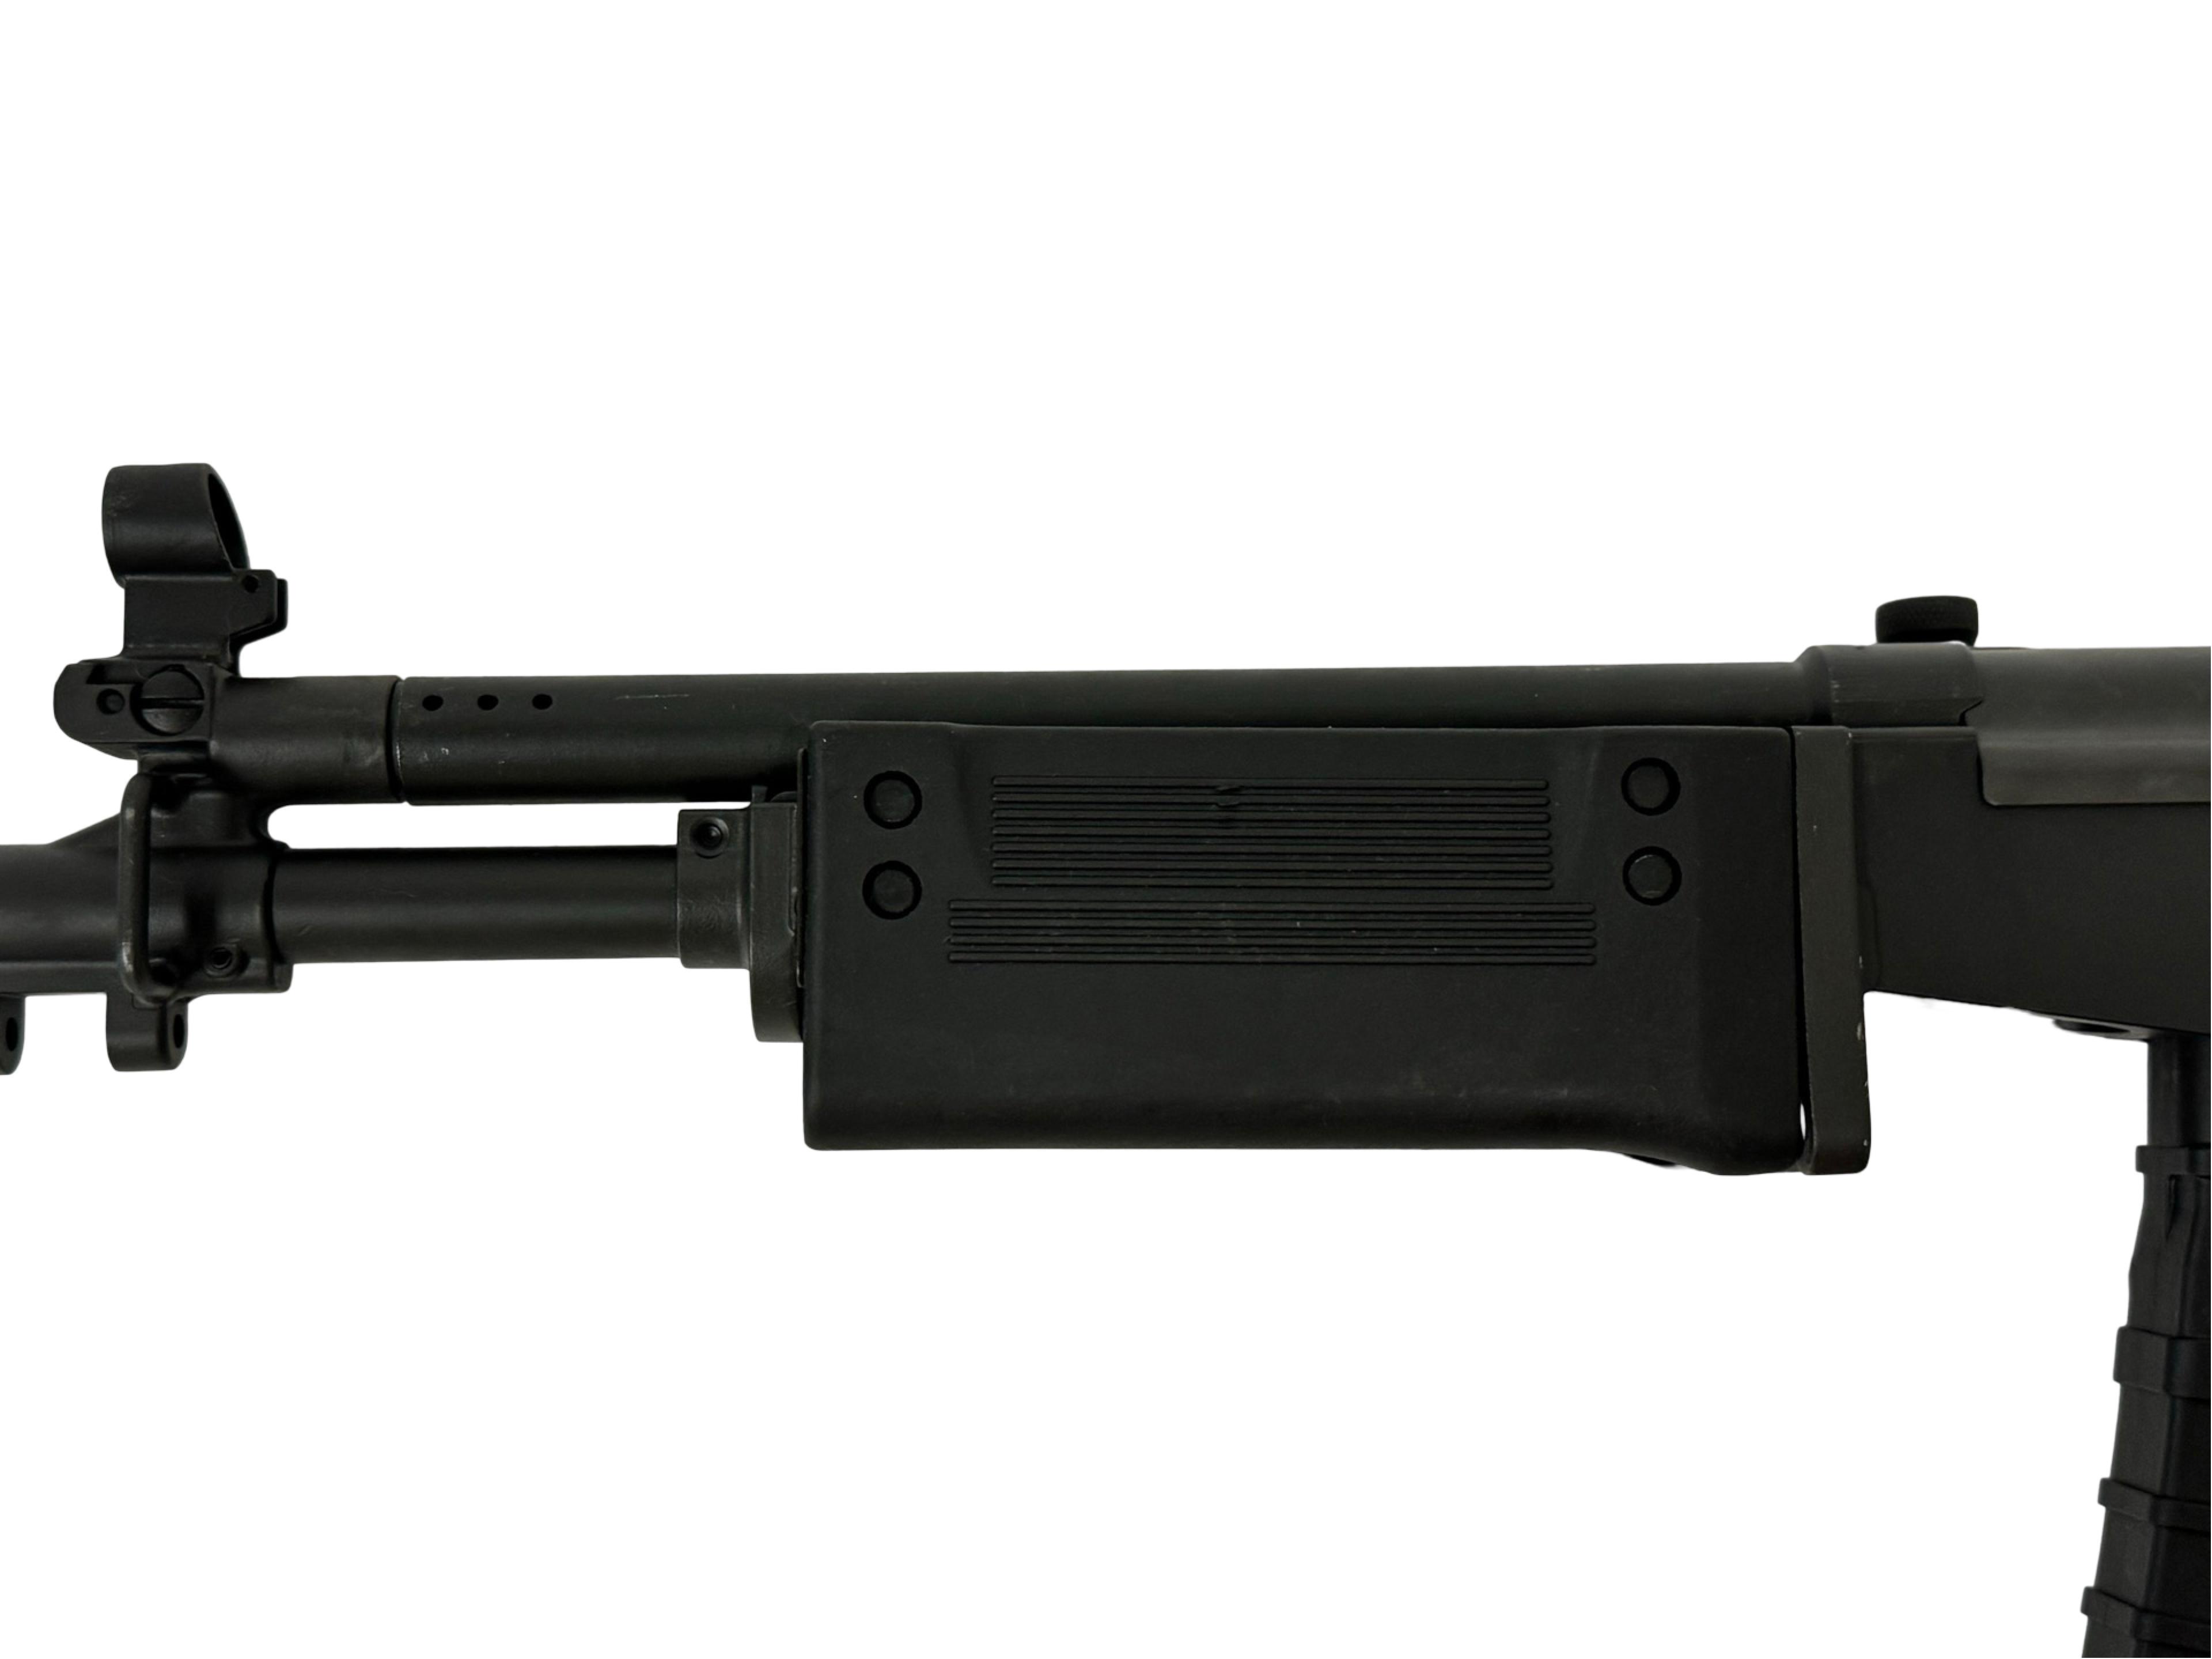 NIB American Tactical Galeo RIA Folding Skeleton 5.56mm NATO Semi-Automatic Rifle